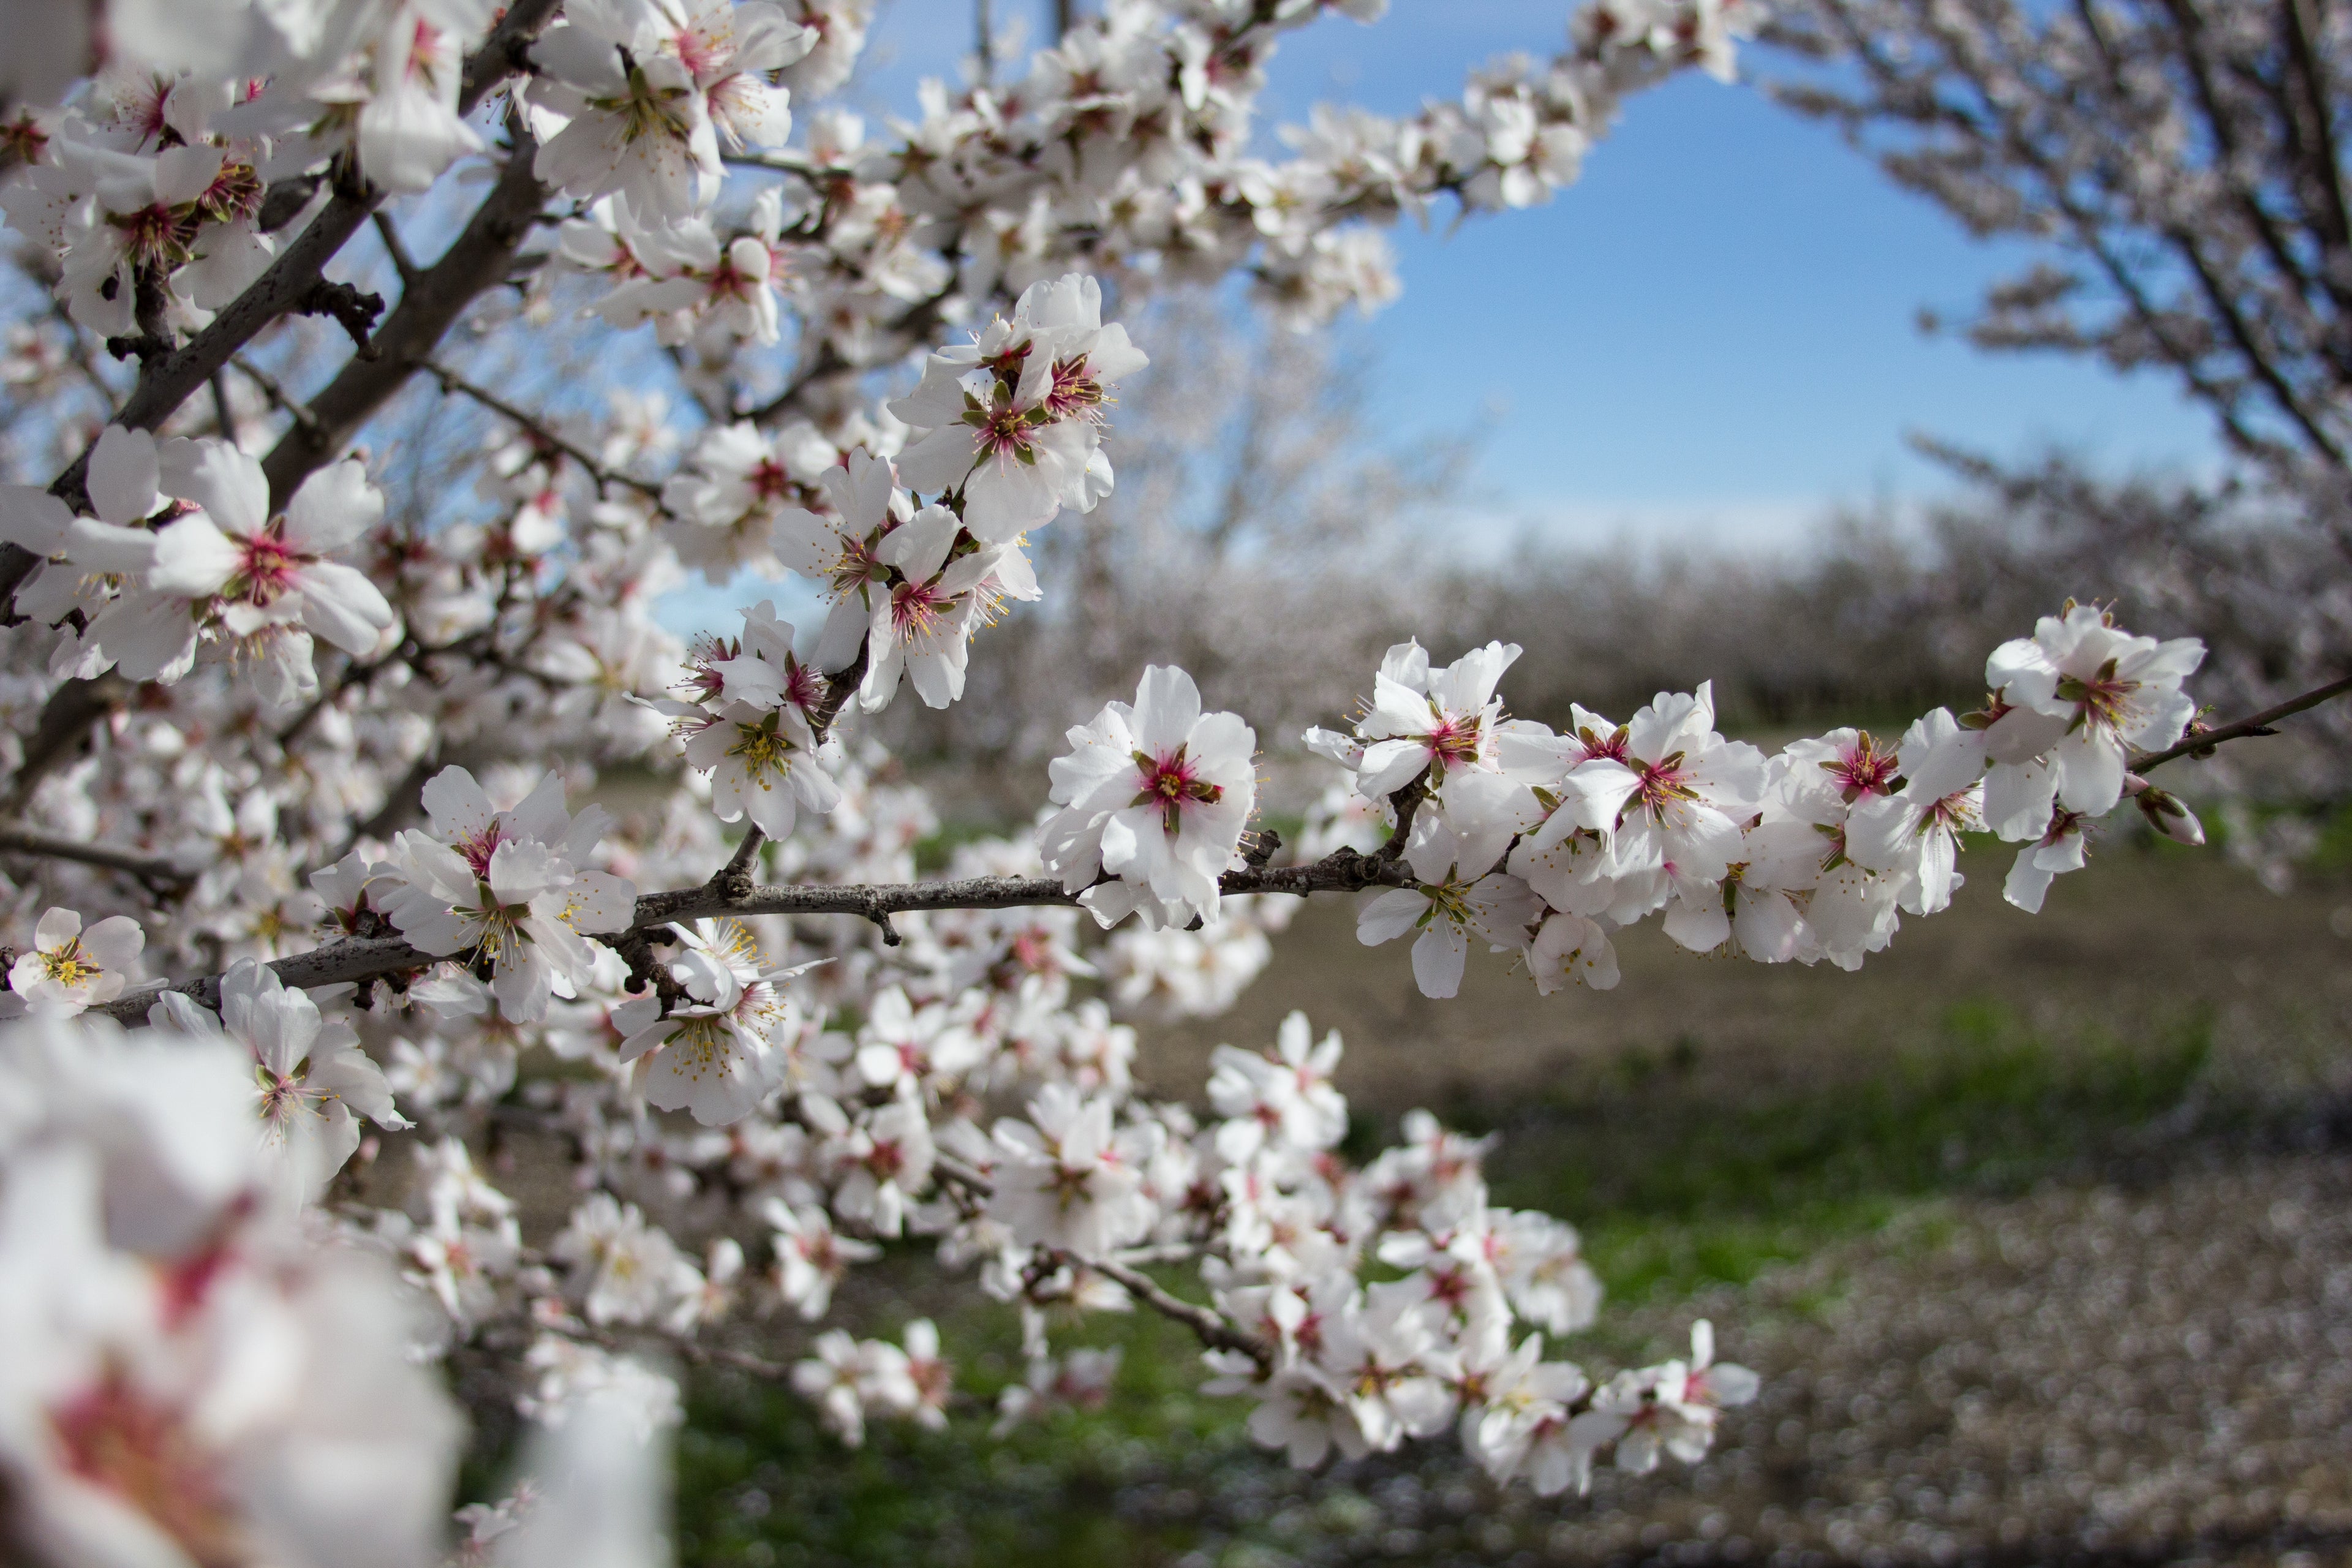 California Almond Tree in bloom